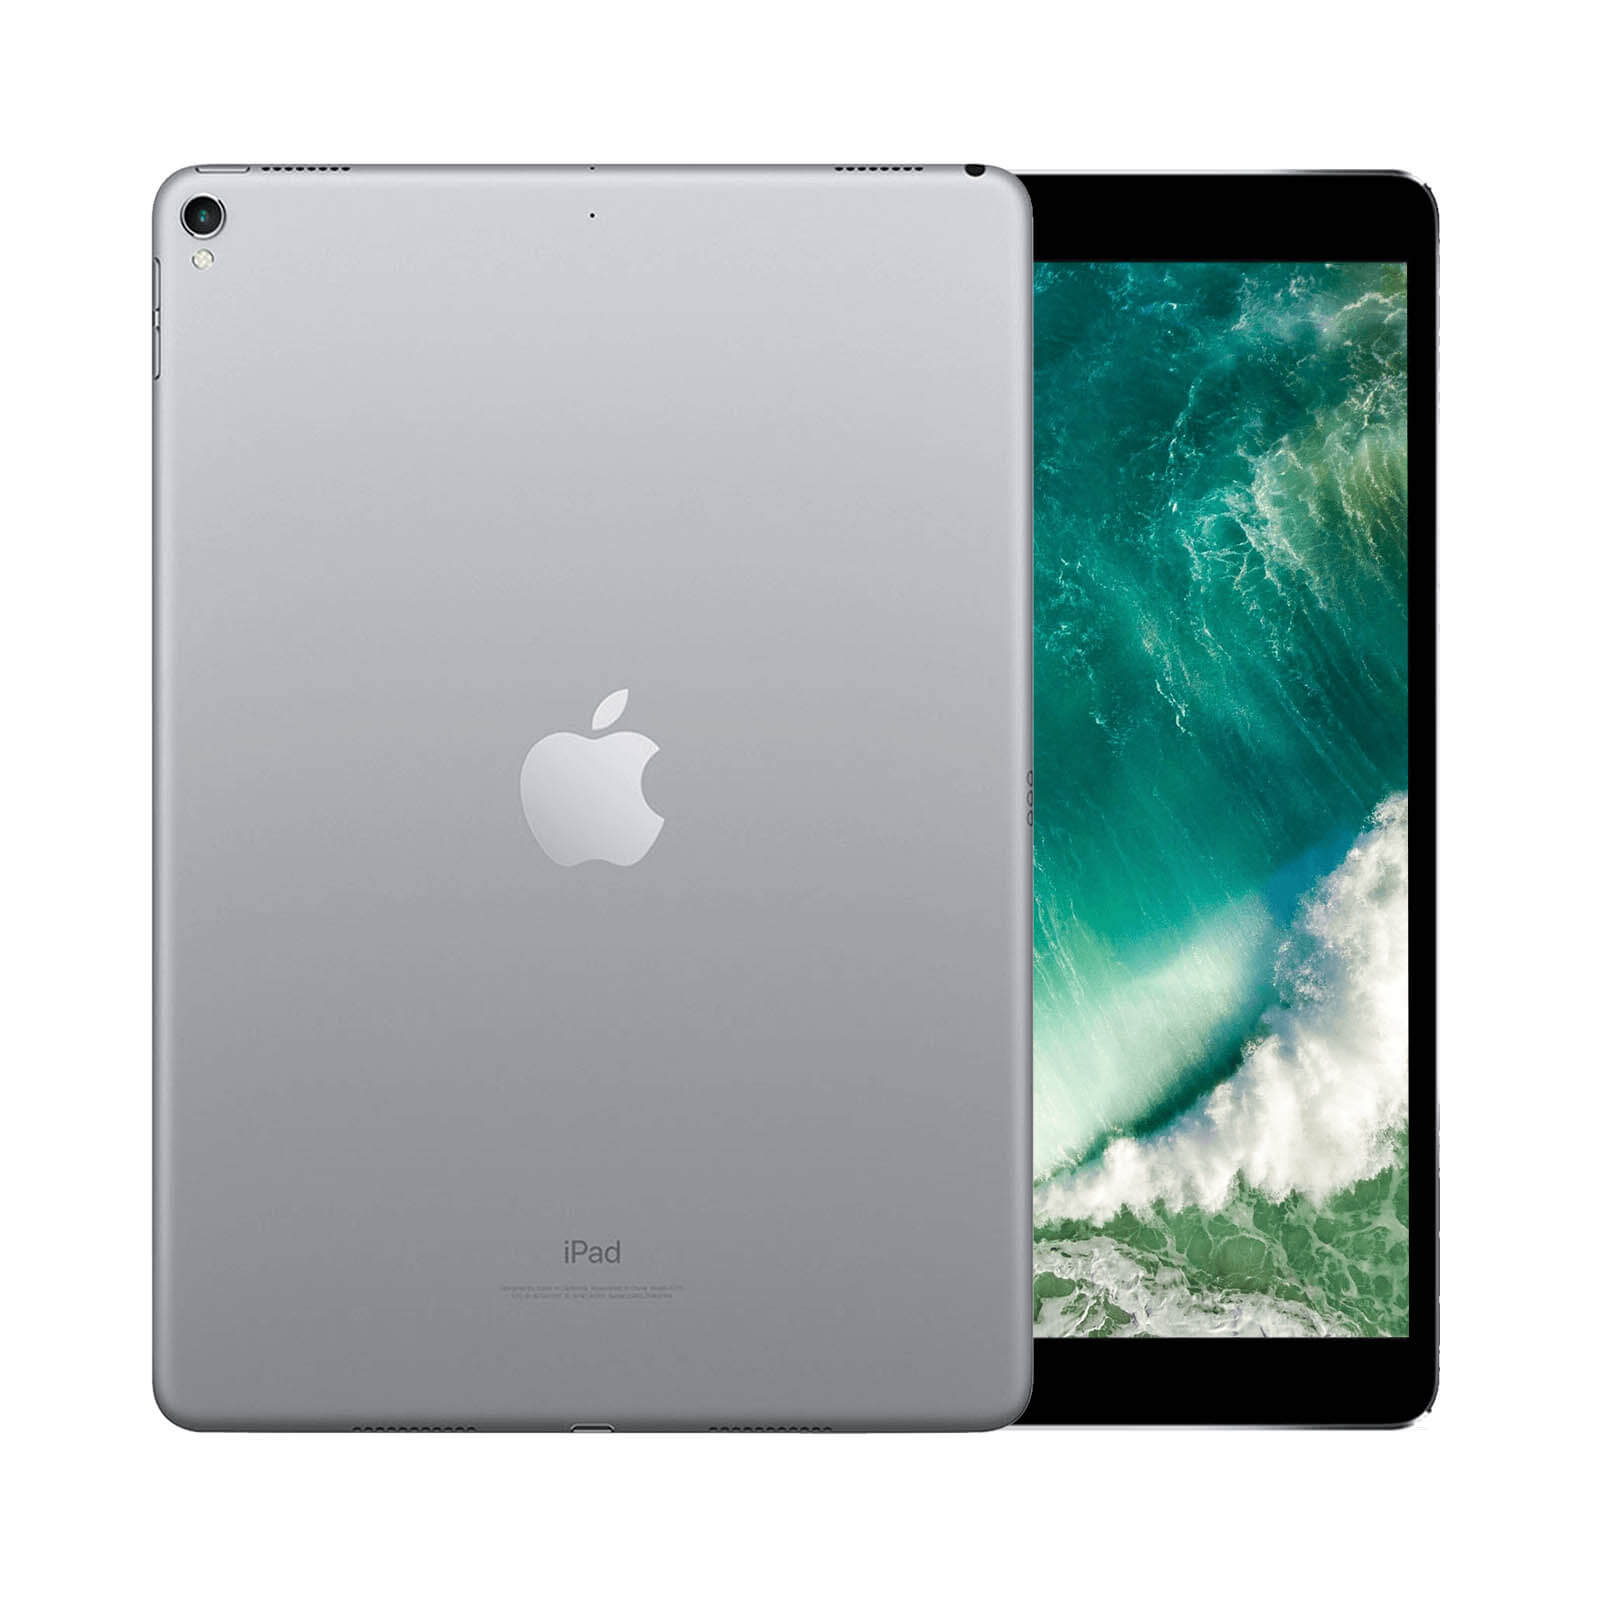 iPad Pro 10.5 Inch 256GB Space Grey Very Good - WiFi